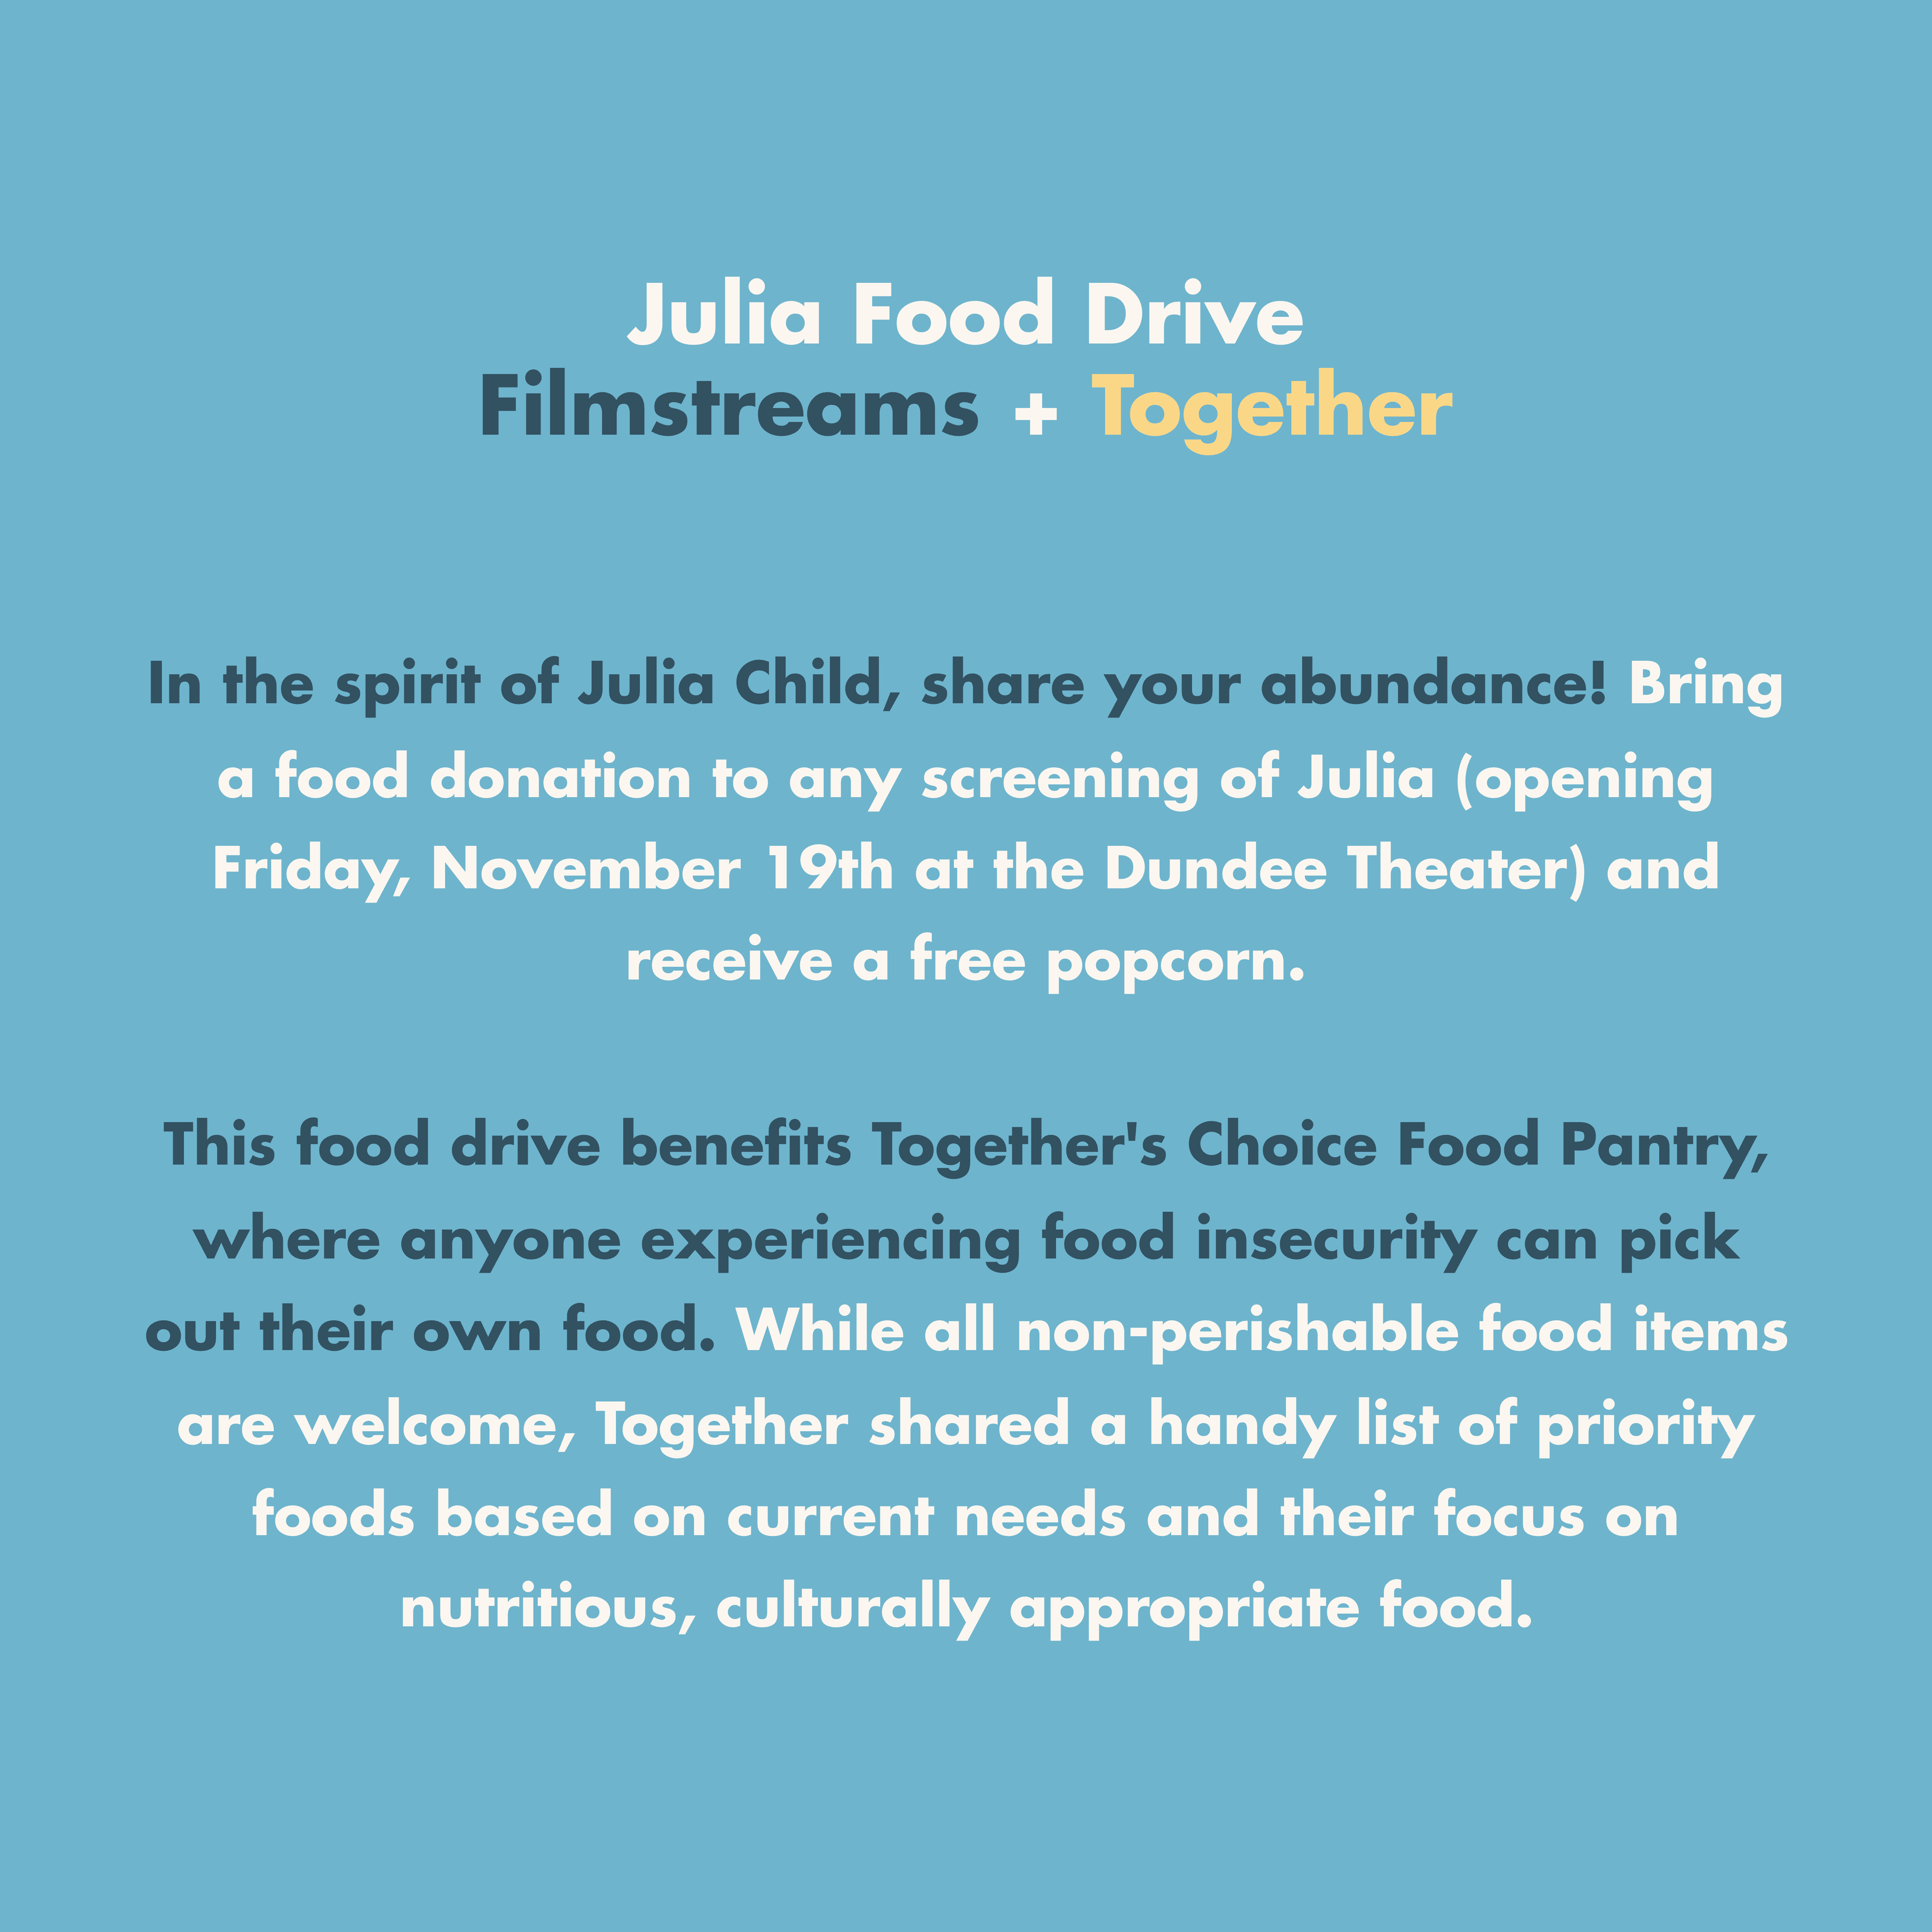 Julia Food Drive with Film Streams